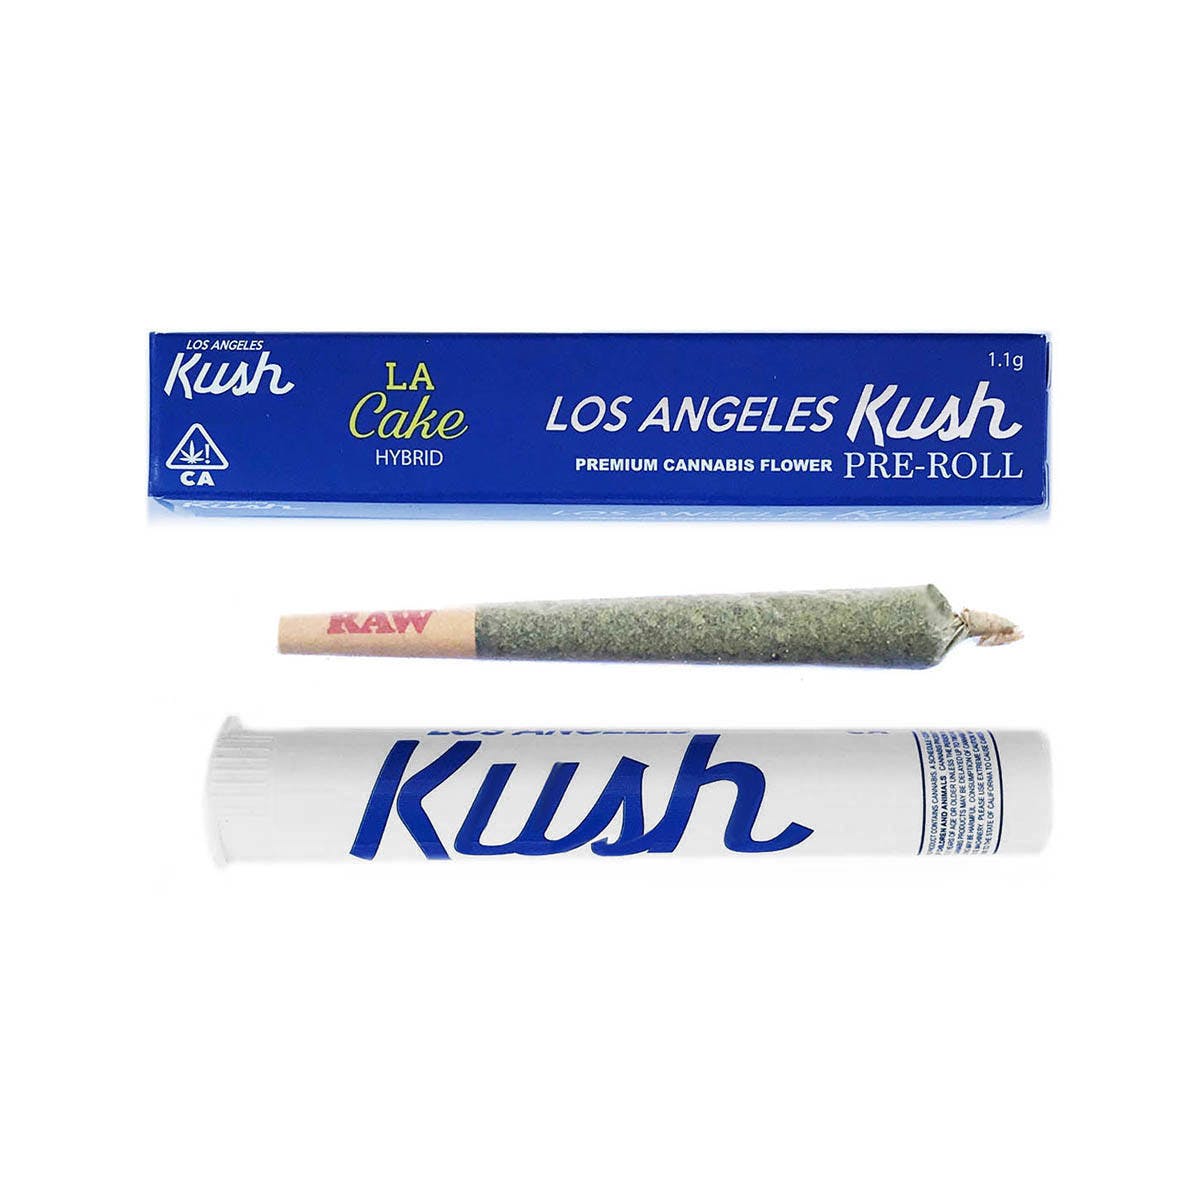 marijuana-dispensaries-25cap-van-nuys-solutions-in-van-nuys-la-cake-lak-pre-roll-1g